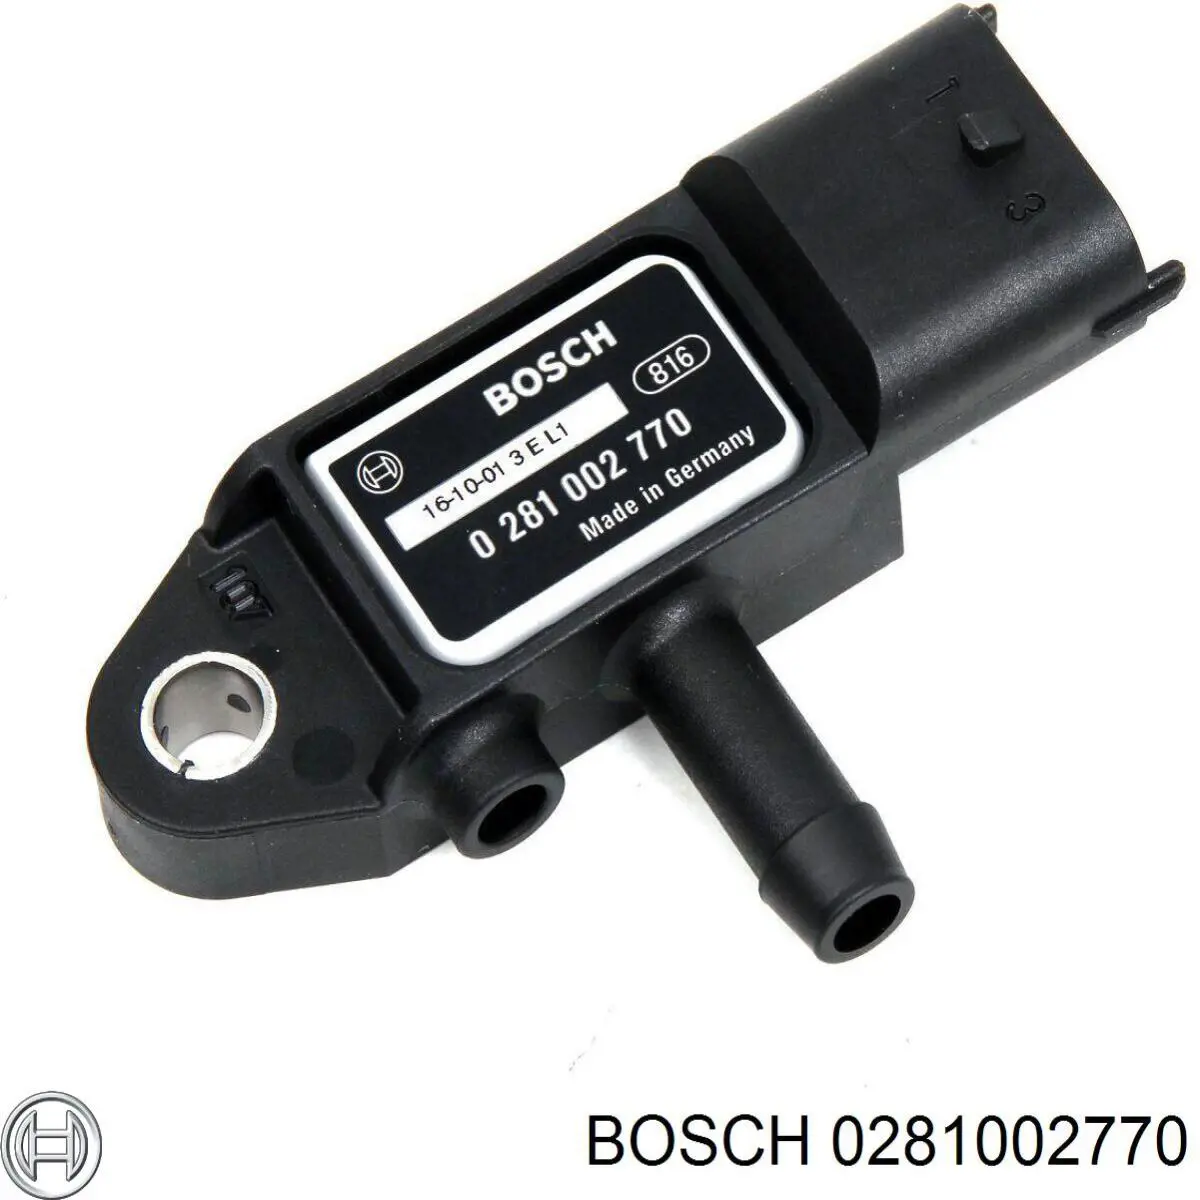 0281002770 Bosch sensor de presion gases de escape